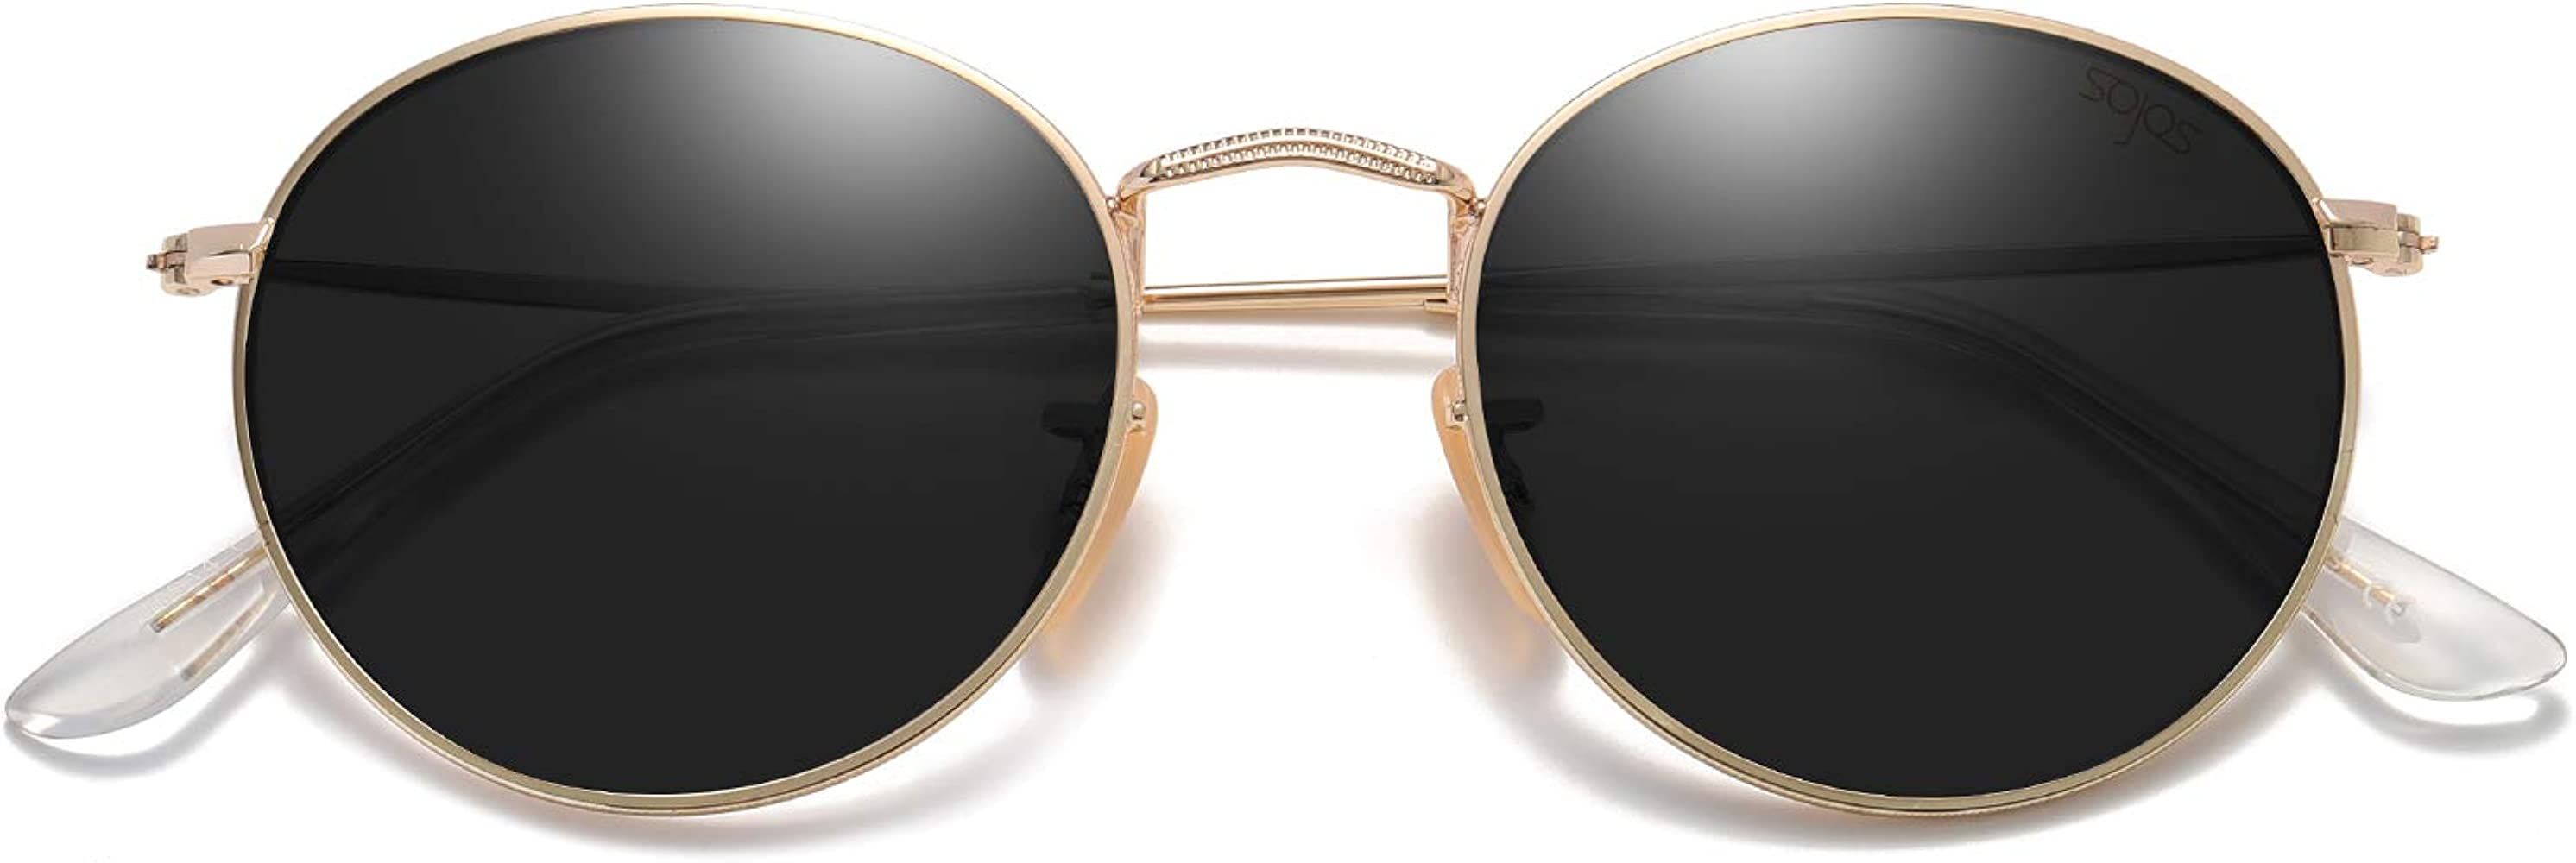 Small Round Polarized Sunglasses Mirrored Lens Unisex Glasses SJ1014 3447 | Amazon (US)